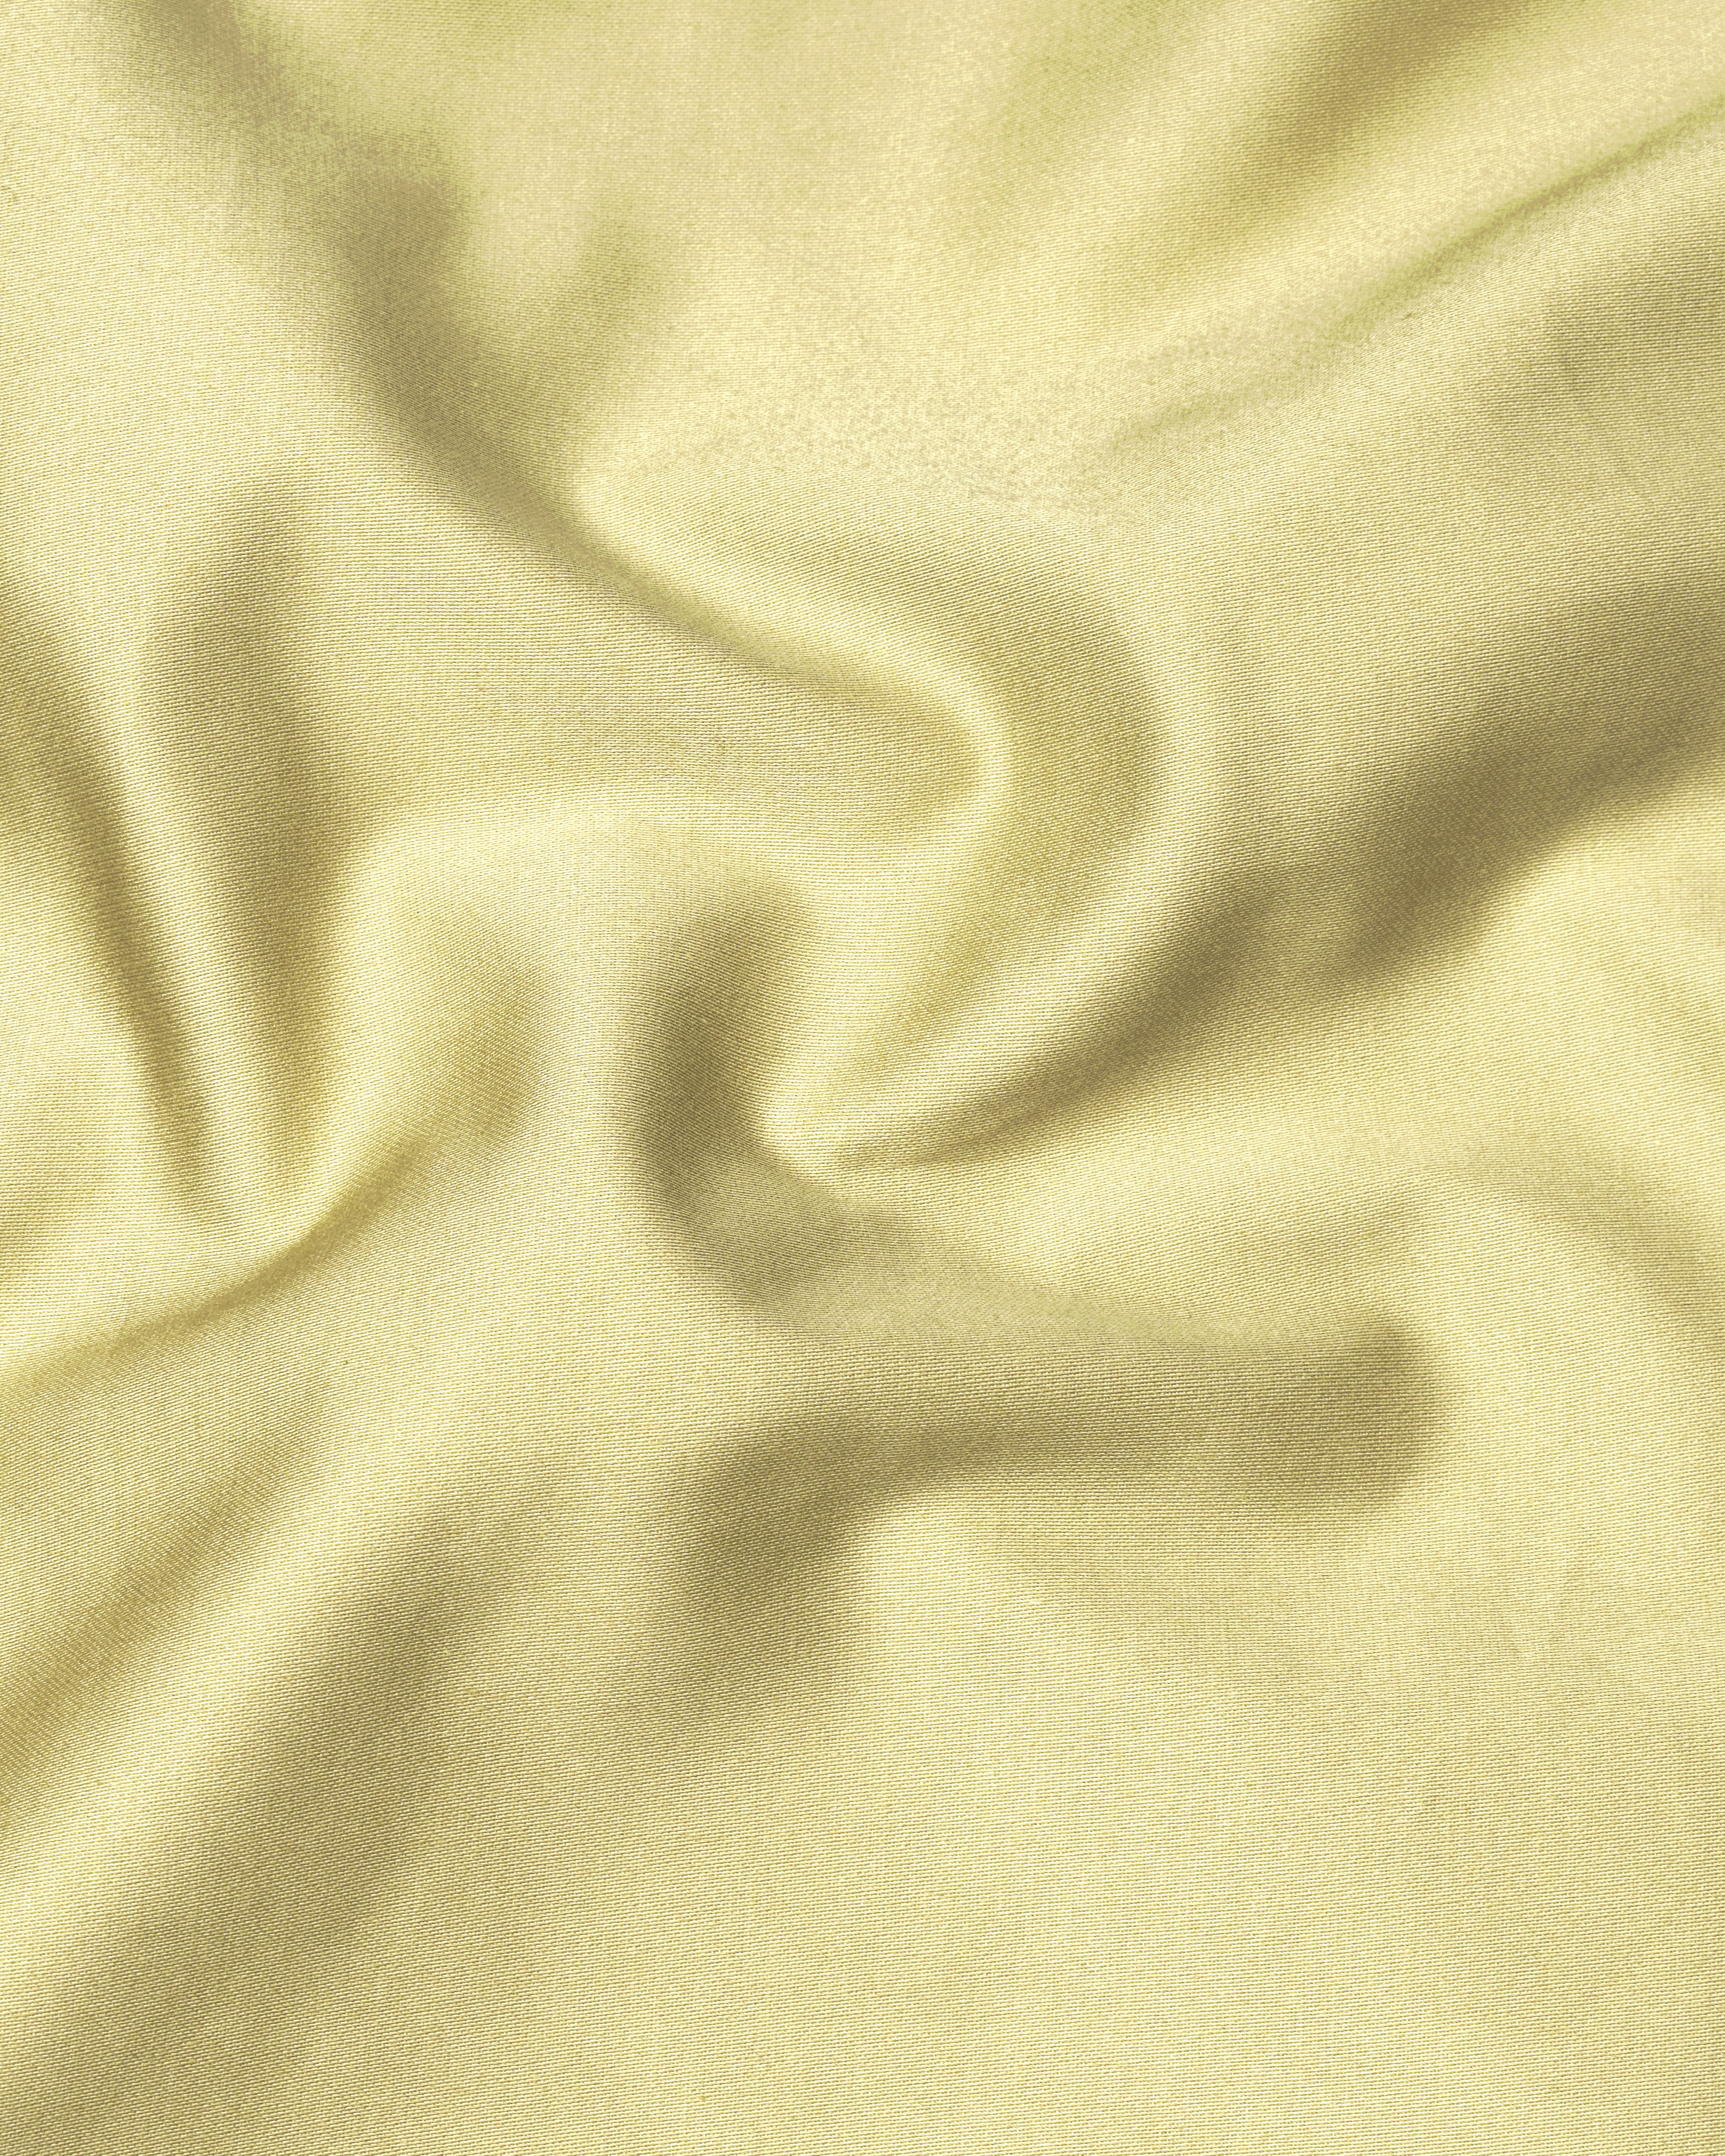 Maize Beige Plain-Solid Premium Cotton Bandhgala/Jodhpuri Suits